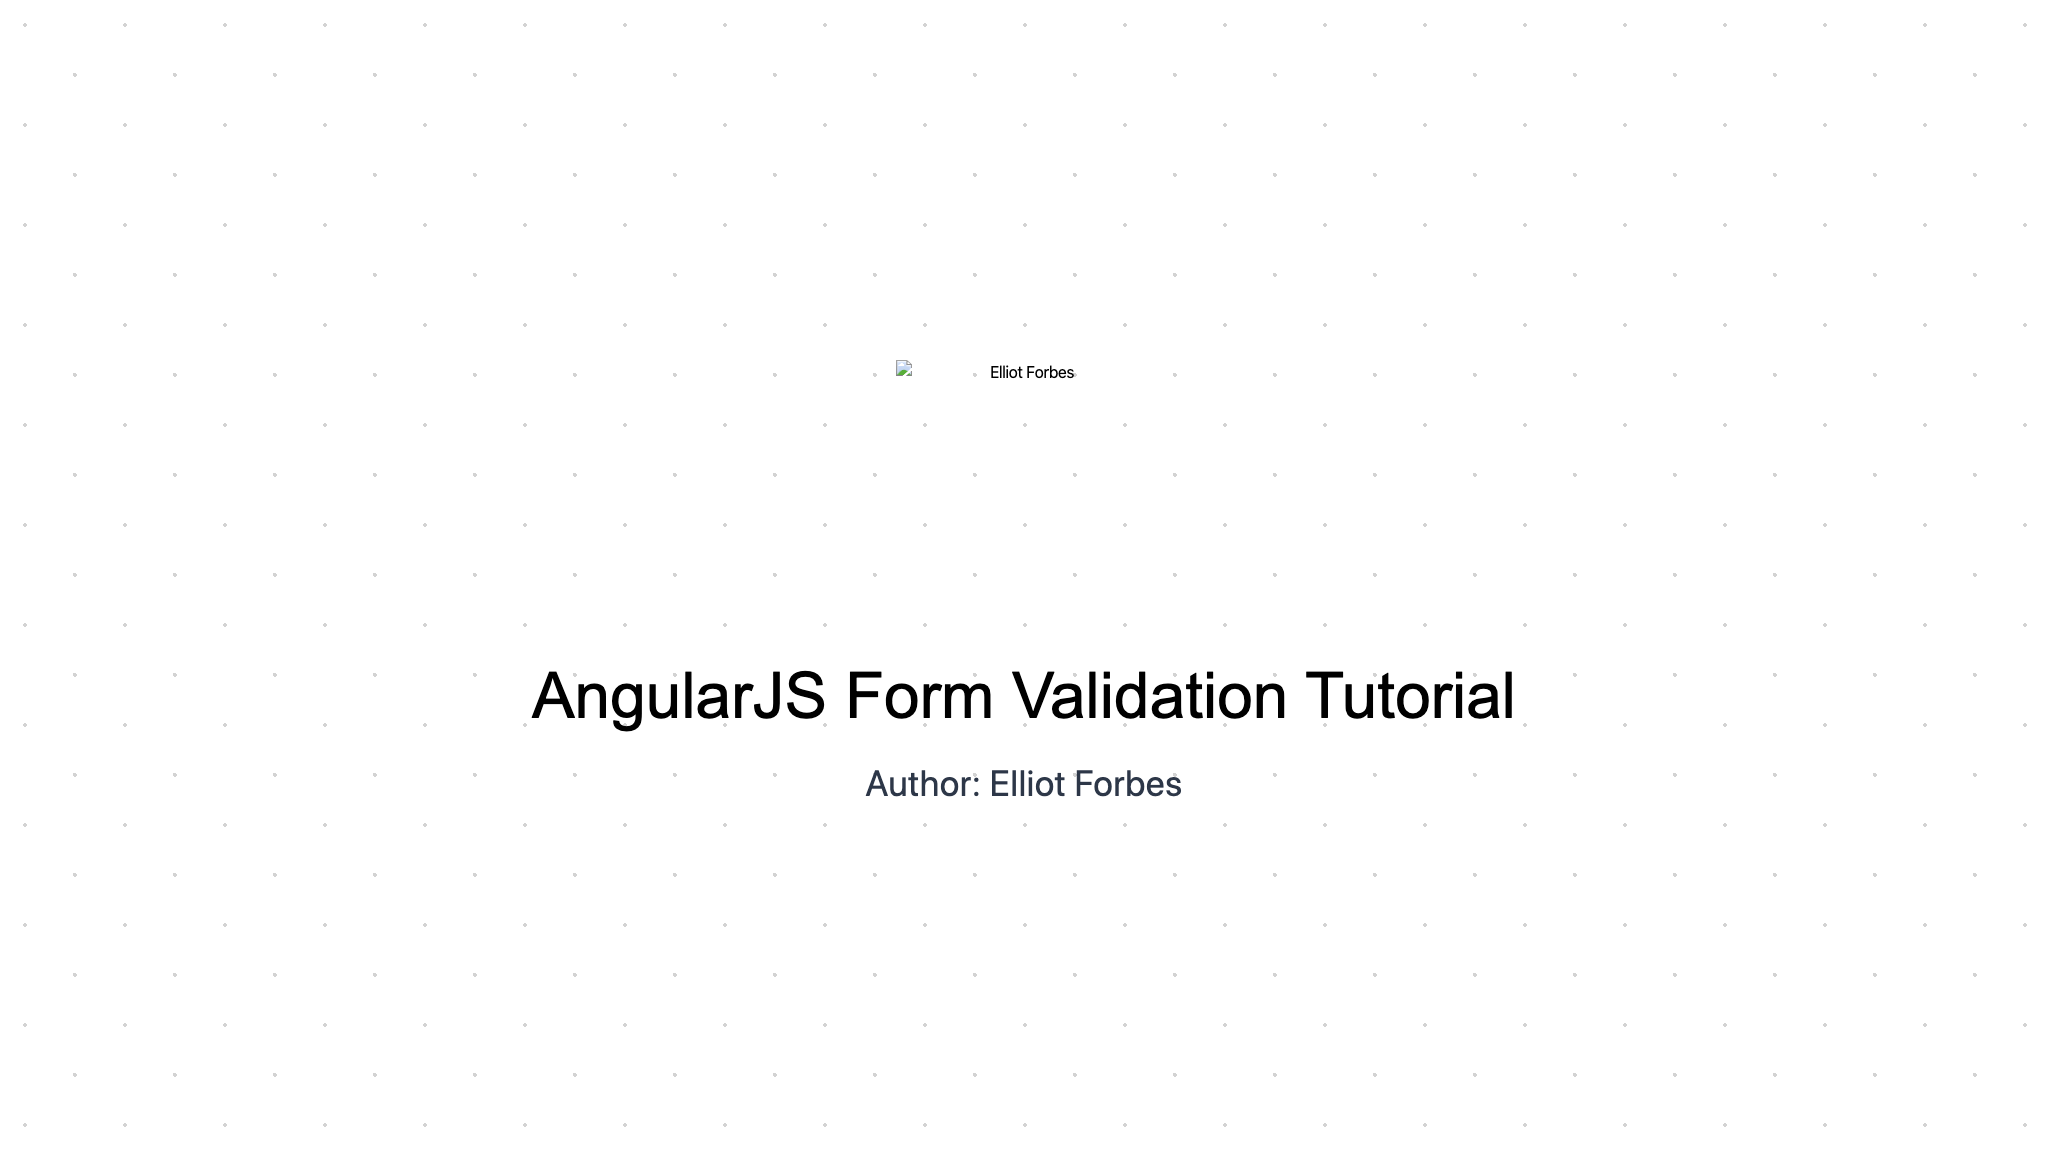 angularjs-form-validation-tutorial-tutorialedge